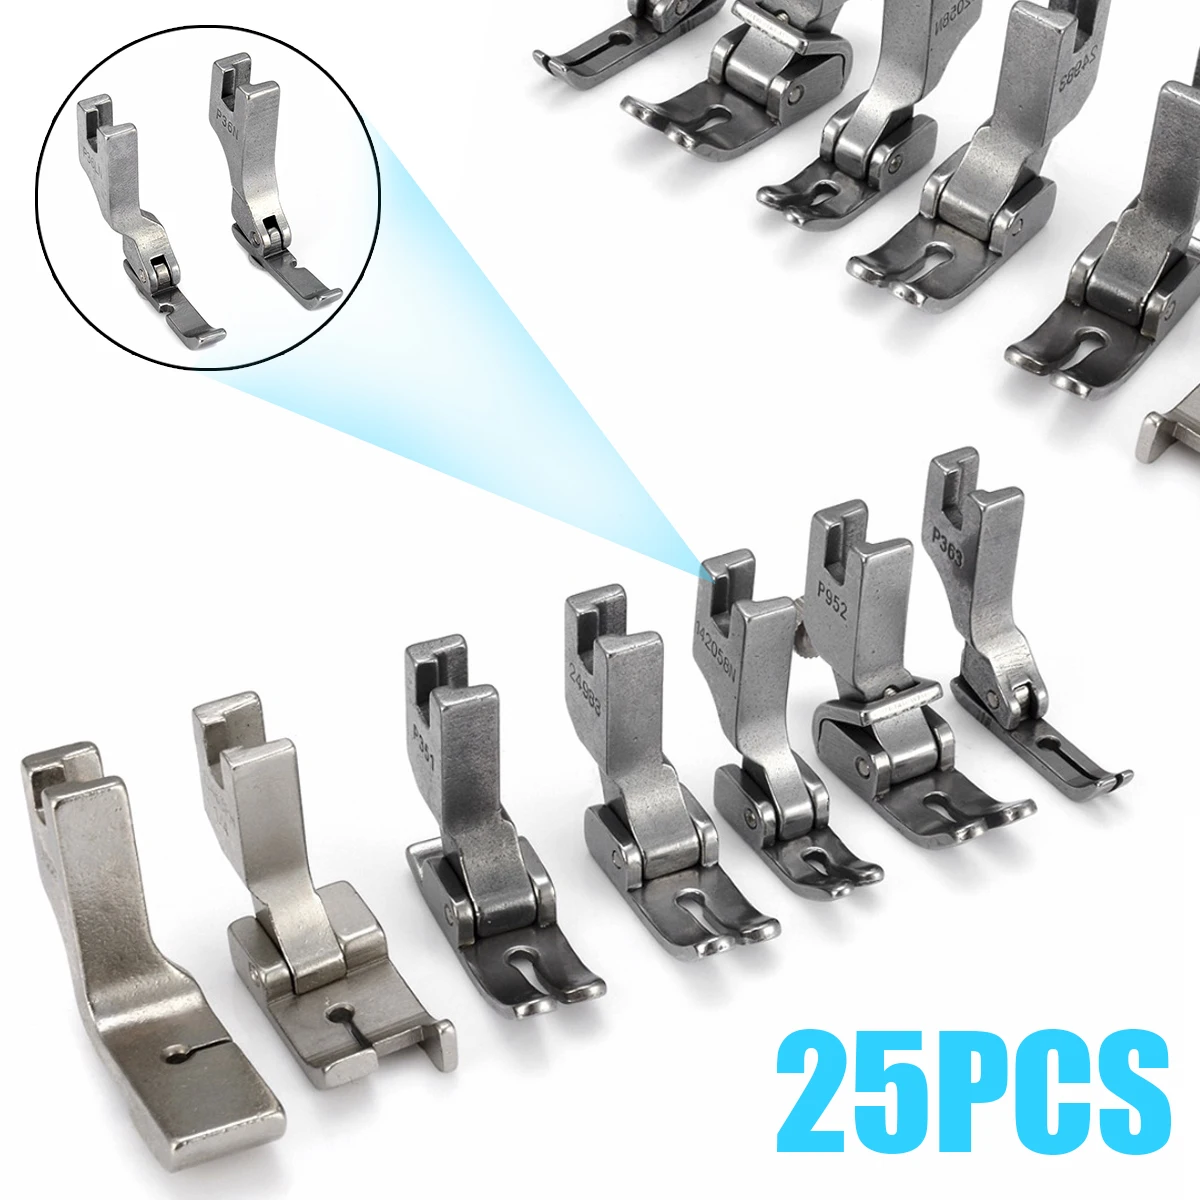 

25Pcs/Lot Mini Portable Sewing Machine Presser Foot Feet Set For JUKI DDL-5550 8500 8700 Industrial Sewing Machine Accessories